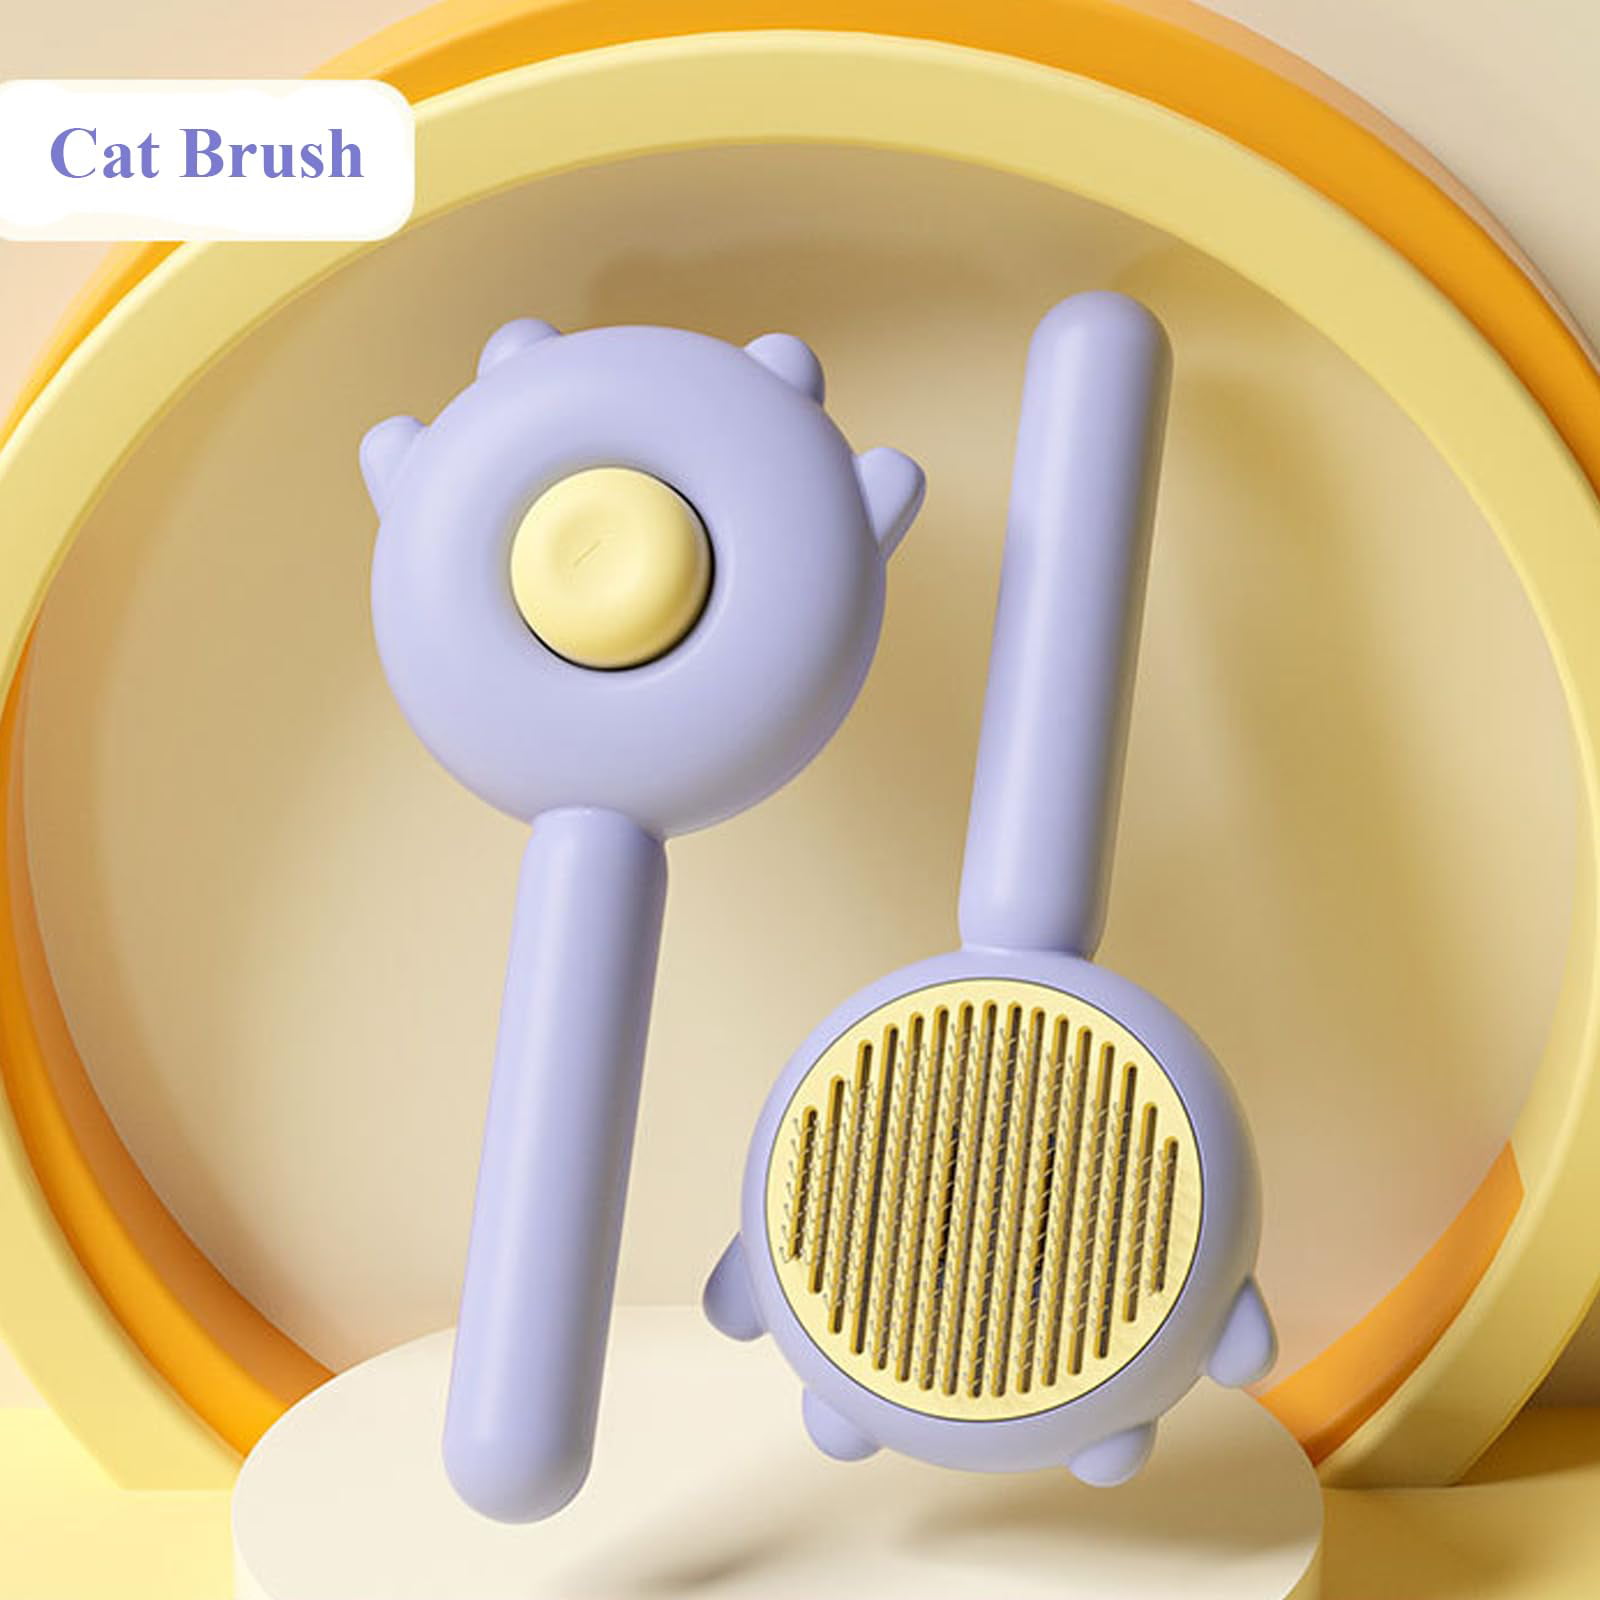 ZEZE Pet Hair Magic Cleaning Brush Set